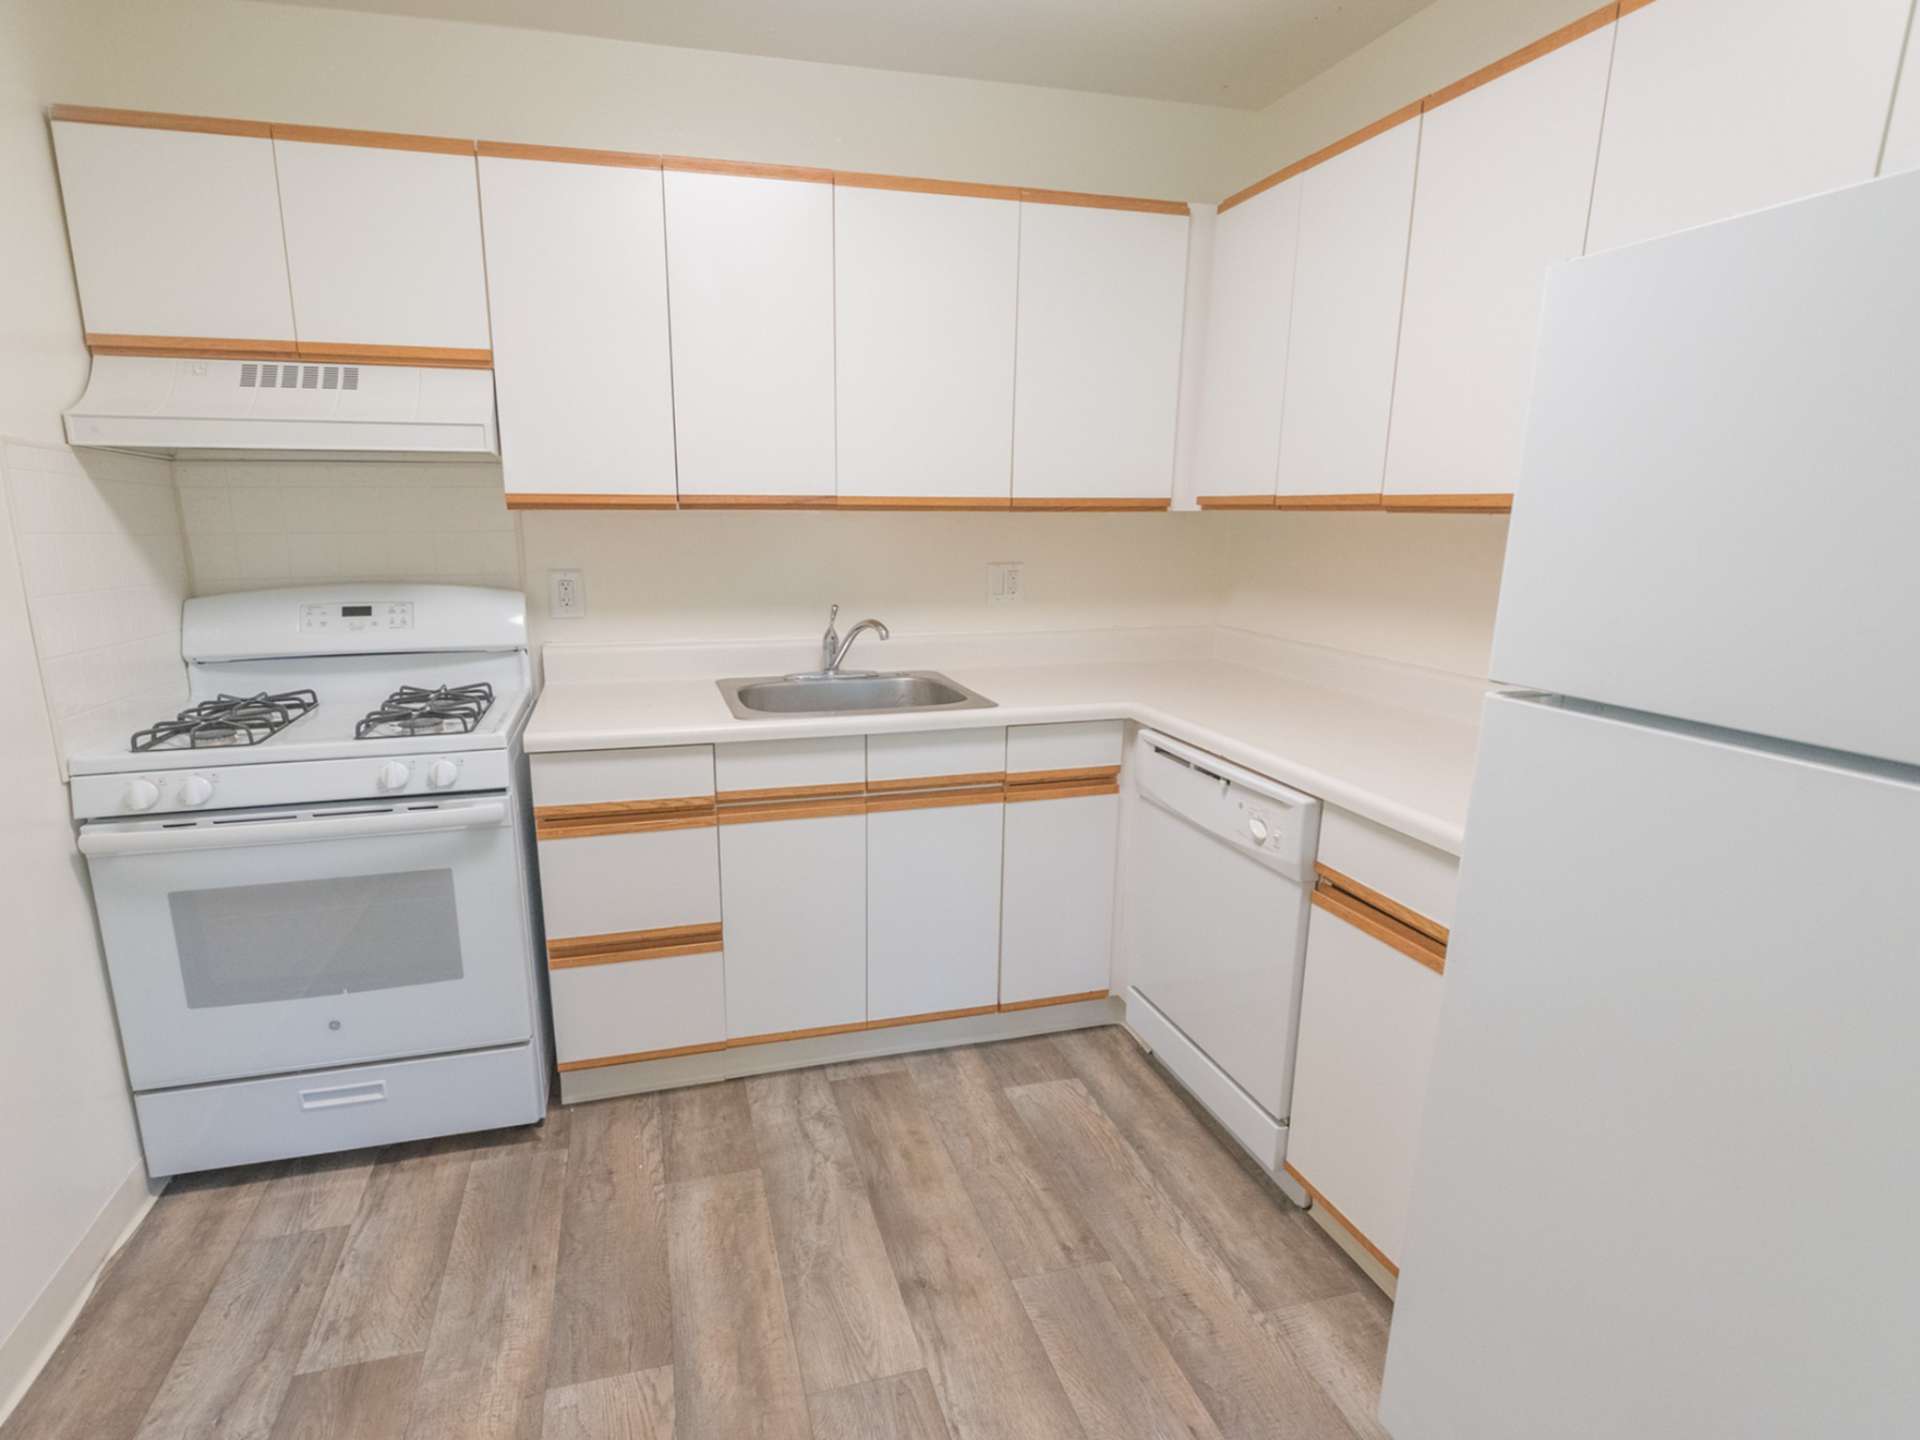 Kitchen with dishwasher, stovetop oven, fridge, and hardwood-style floors.